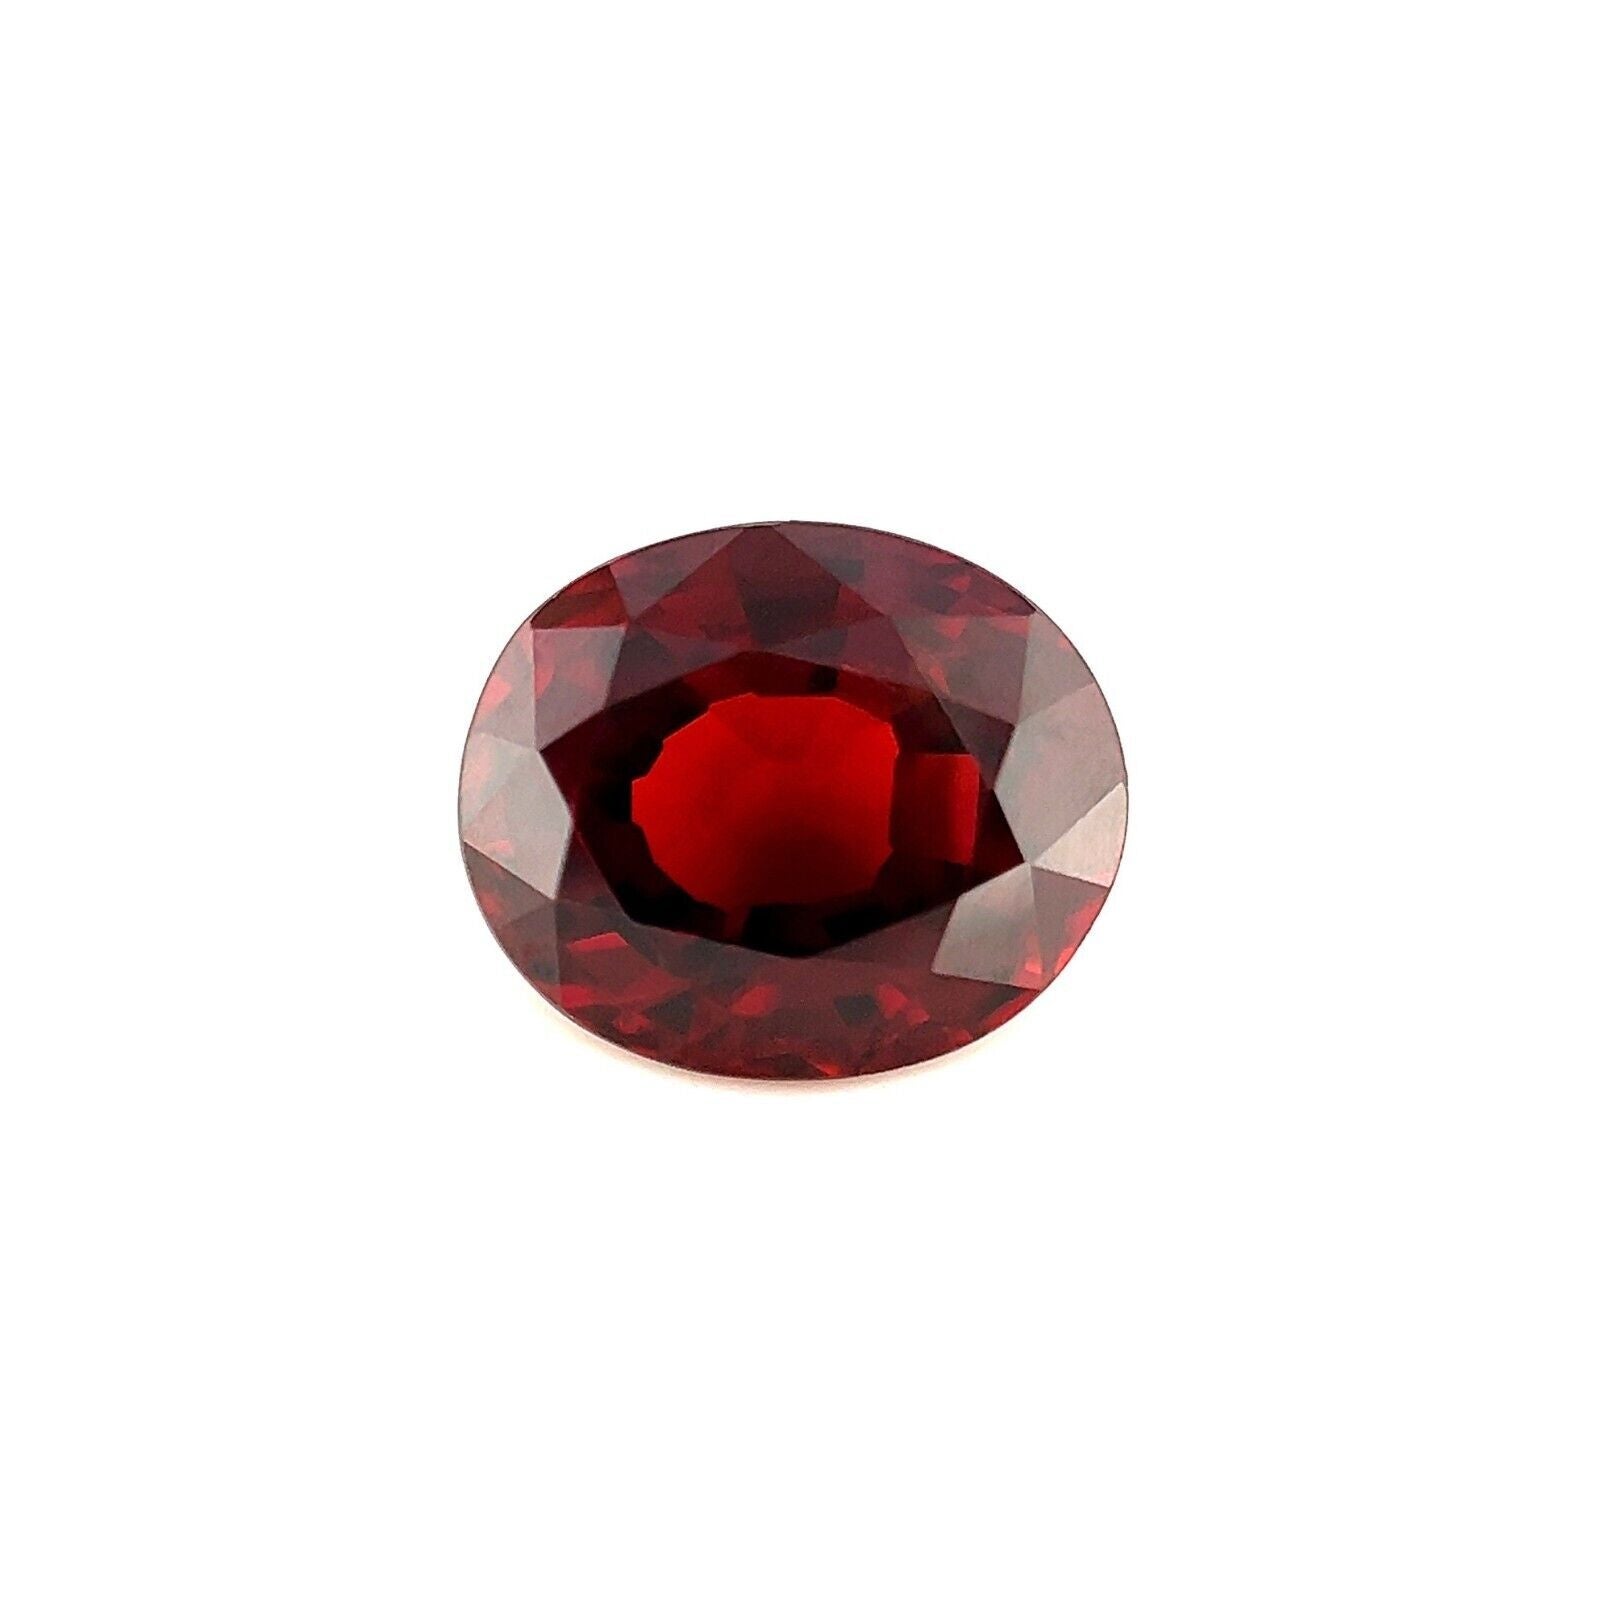 Deep Orange Red Spessartite Garnet 2.36ct Oval Cut Loose Gemstone VVS